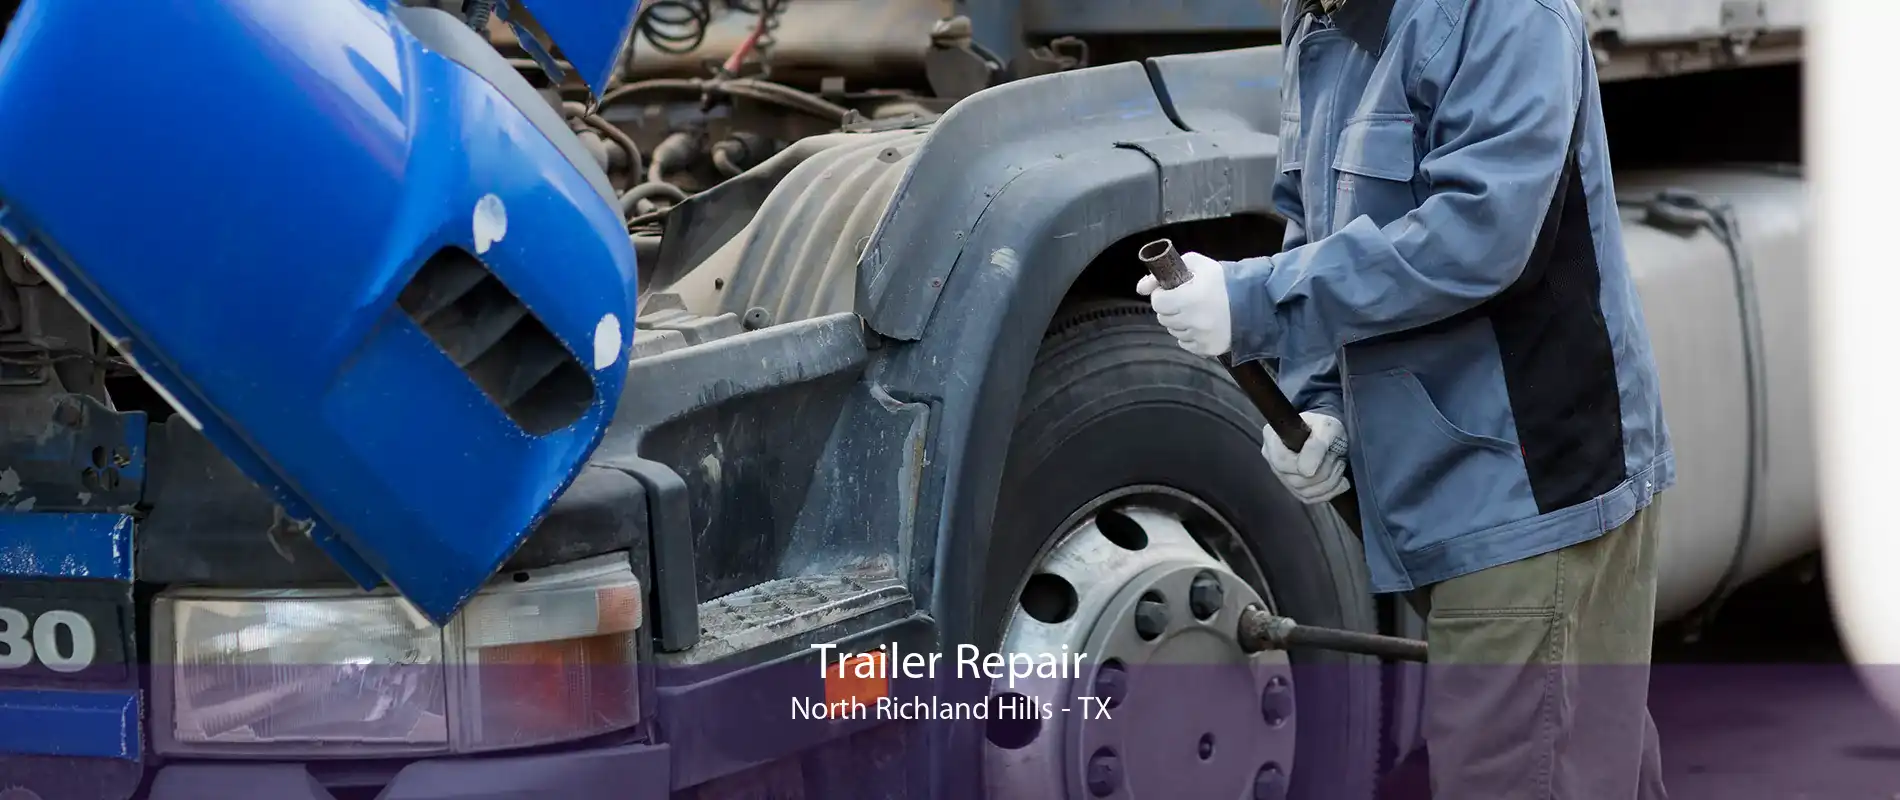 Trailer Repair North Richland Hills - TX